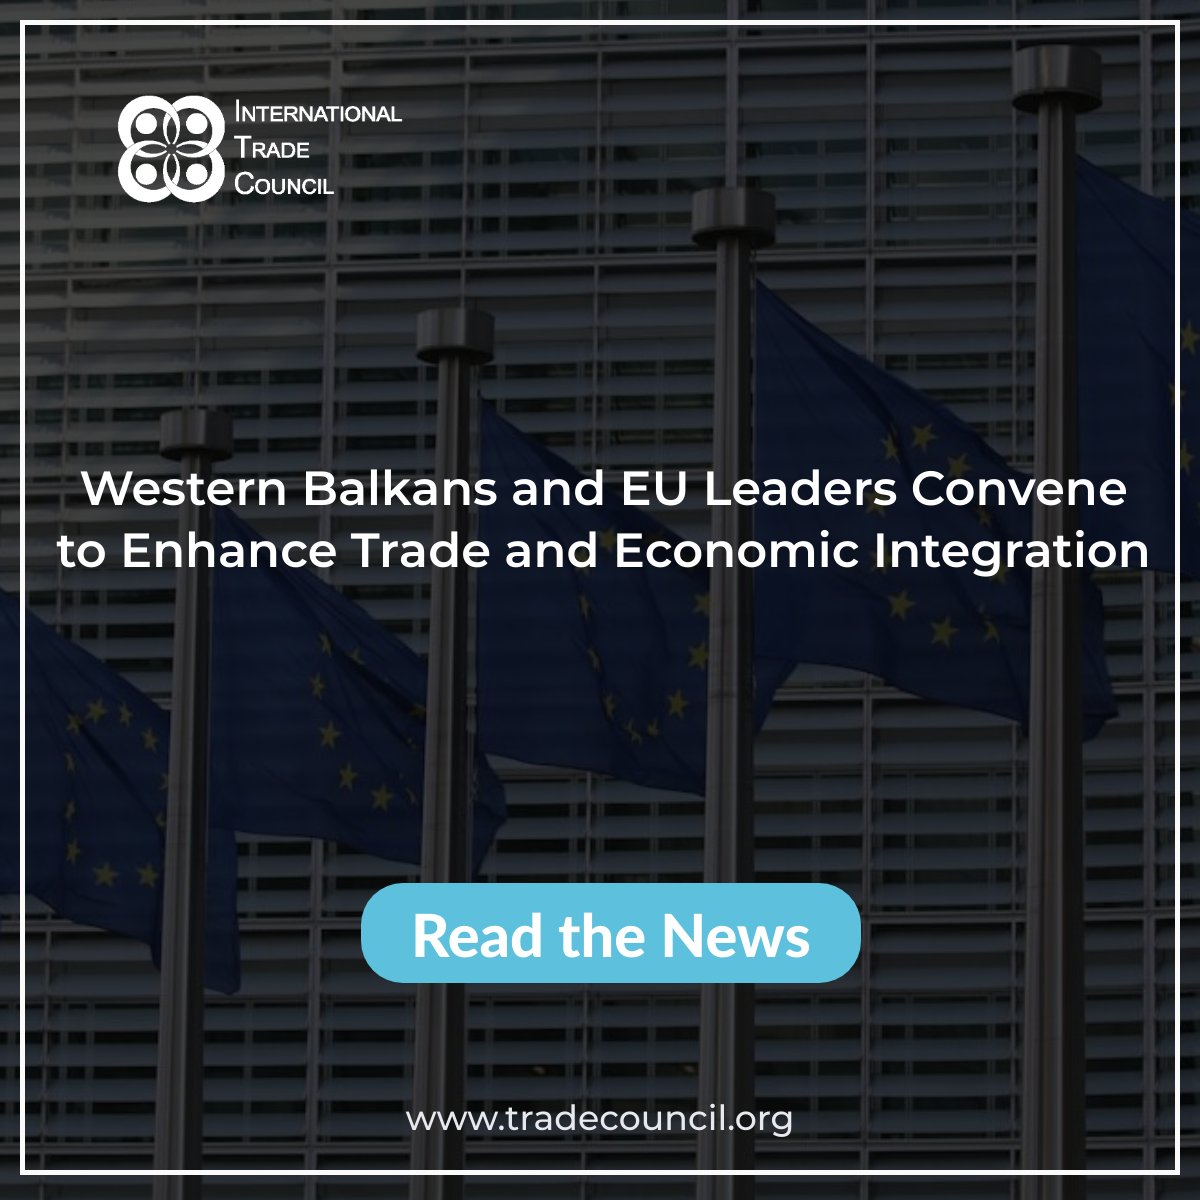 Western Balkans and EU Leaders Convene to Enhance Trade and Economic Integration
Read The News: tradecouncil.org/western-balkan…
#ITCNewsUpdates #TradeNews #EconomicCooperation #EUGrowth #RegionalDevelopment #MarketIntegration